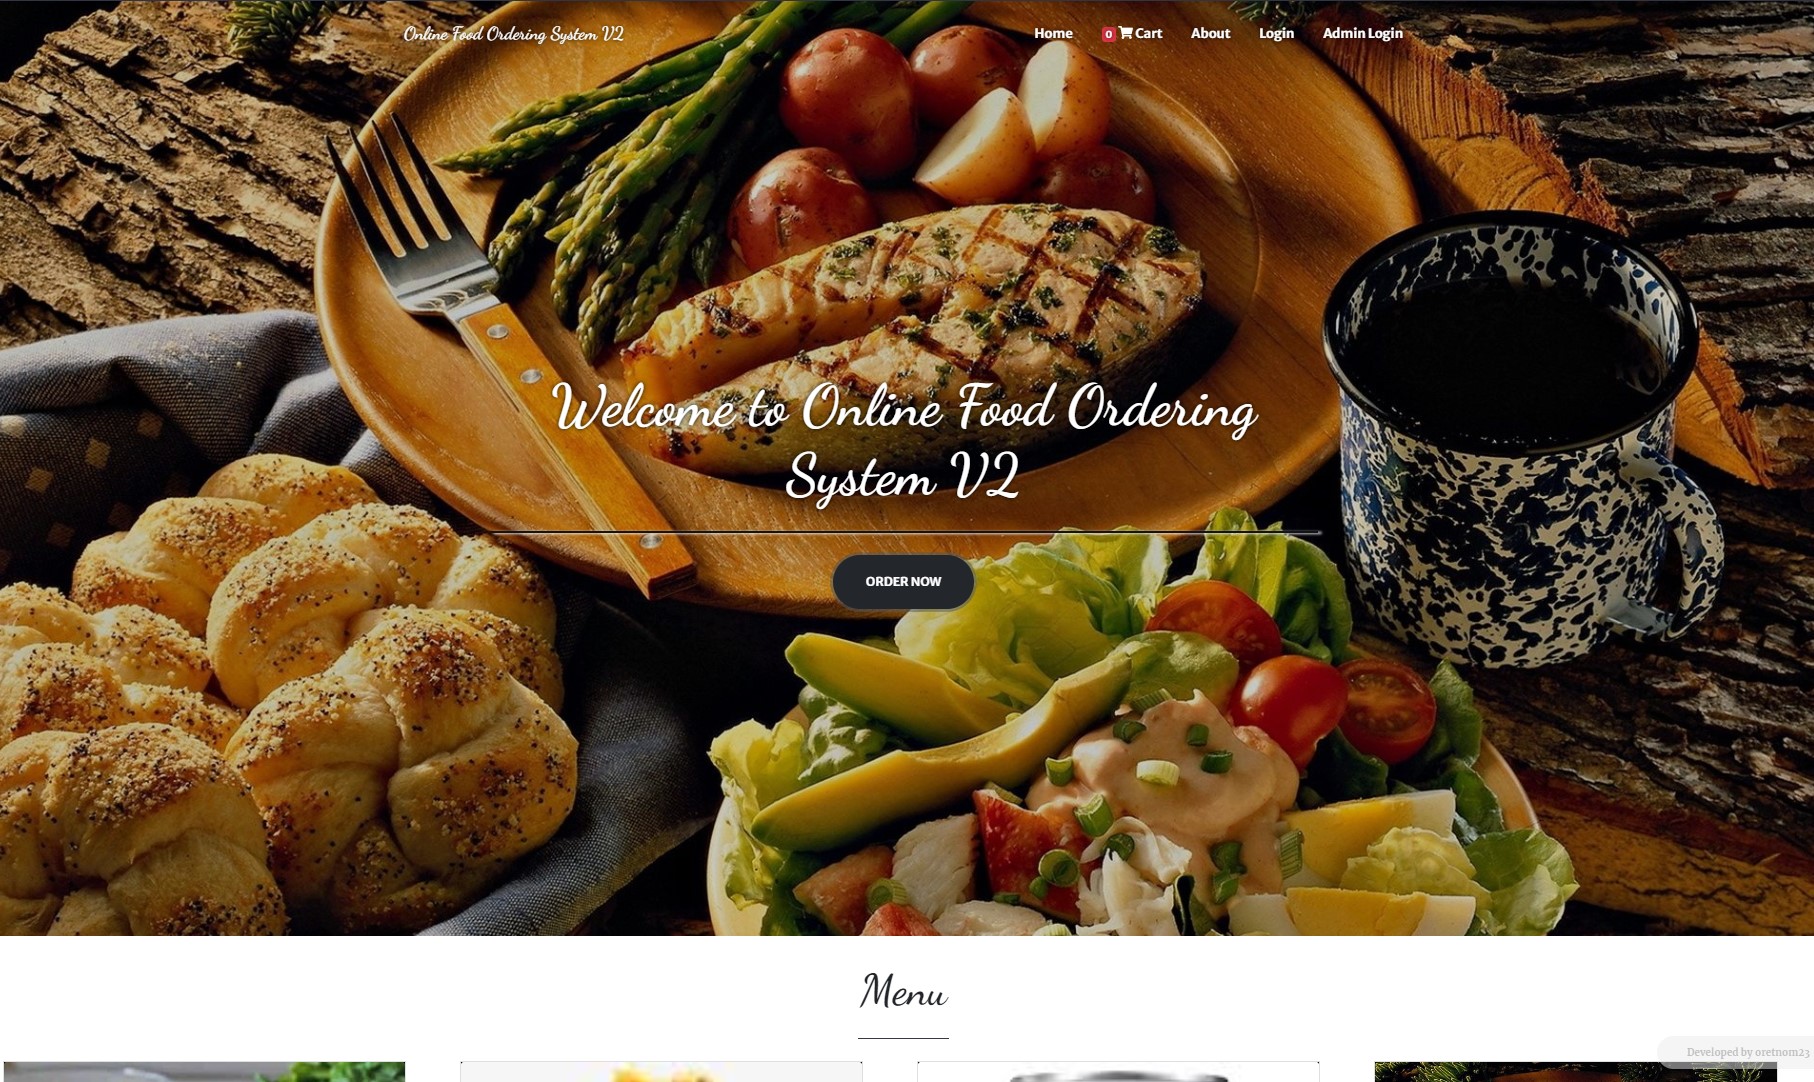 Online Food Ordering System V2 in PHP